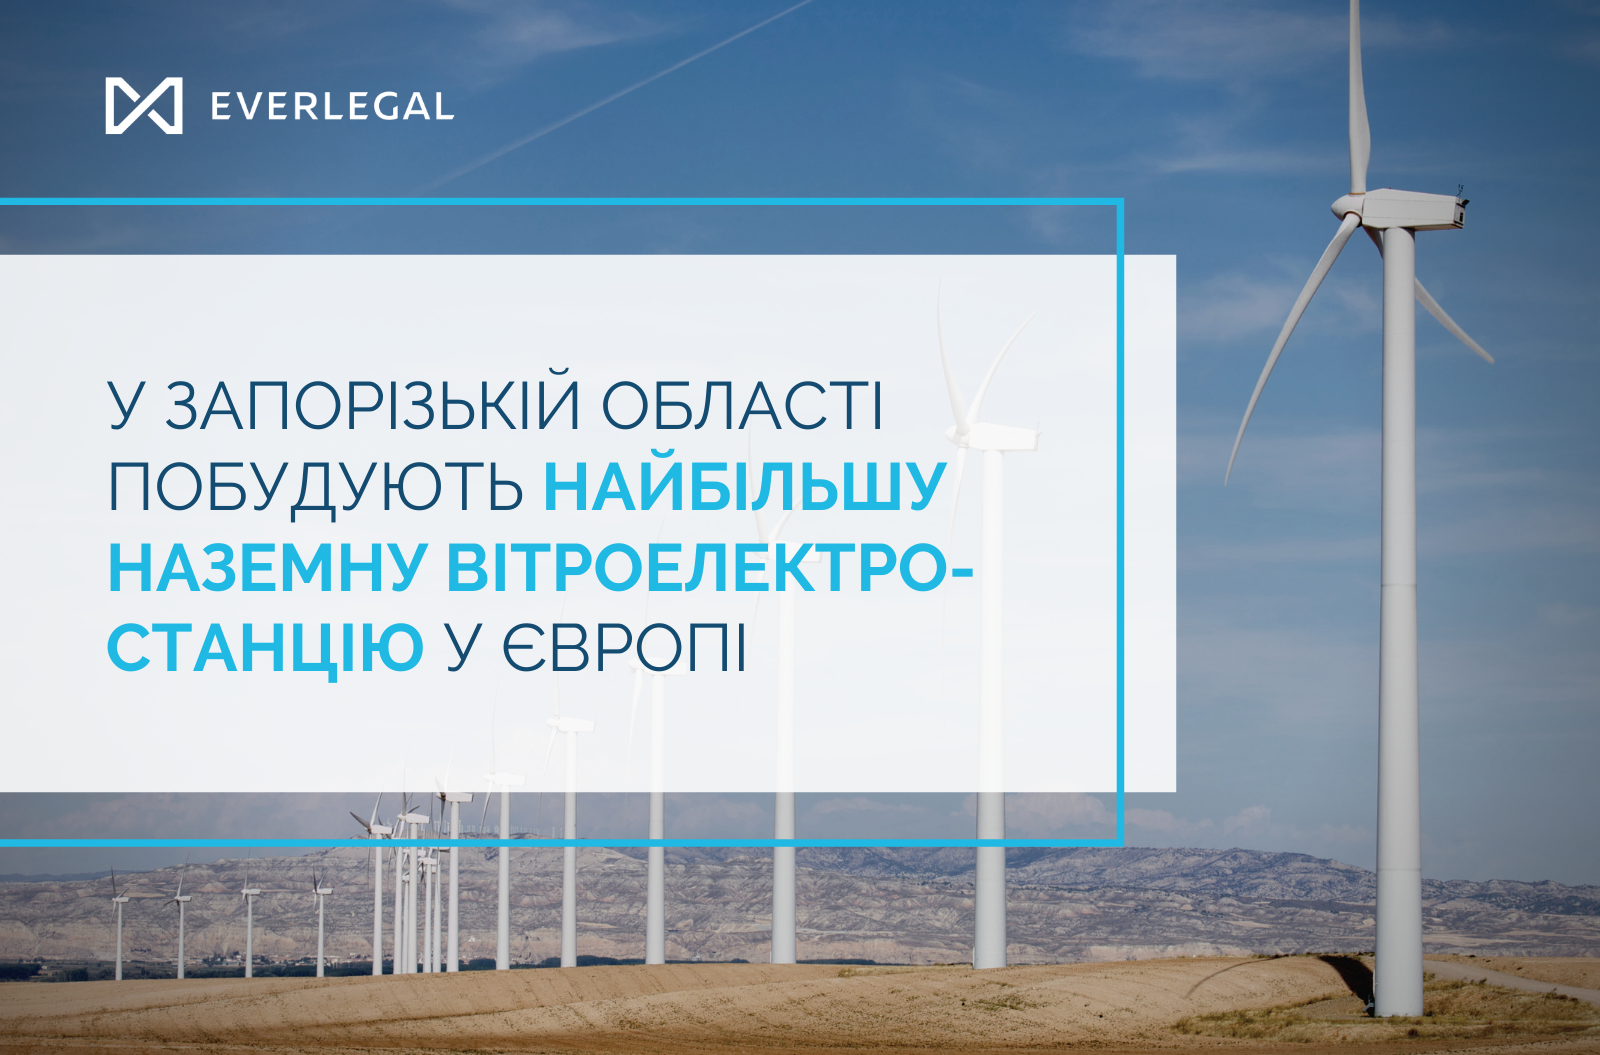 Europe's biggest wind power plant to be constructed in Zaporizhzhia region, Ukraine